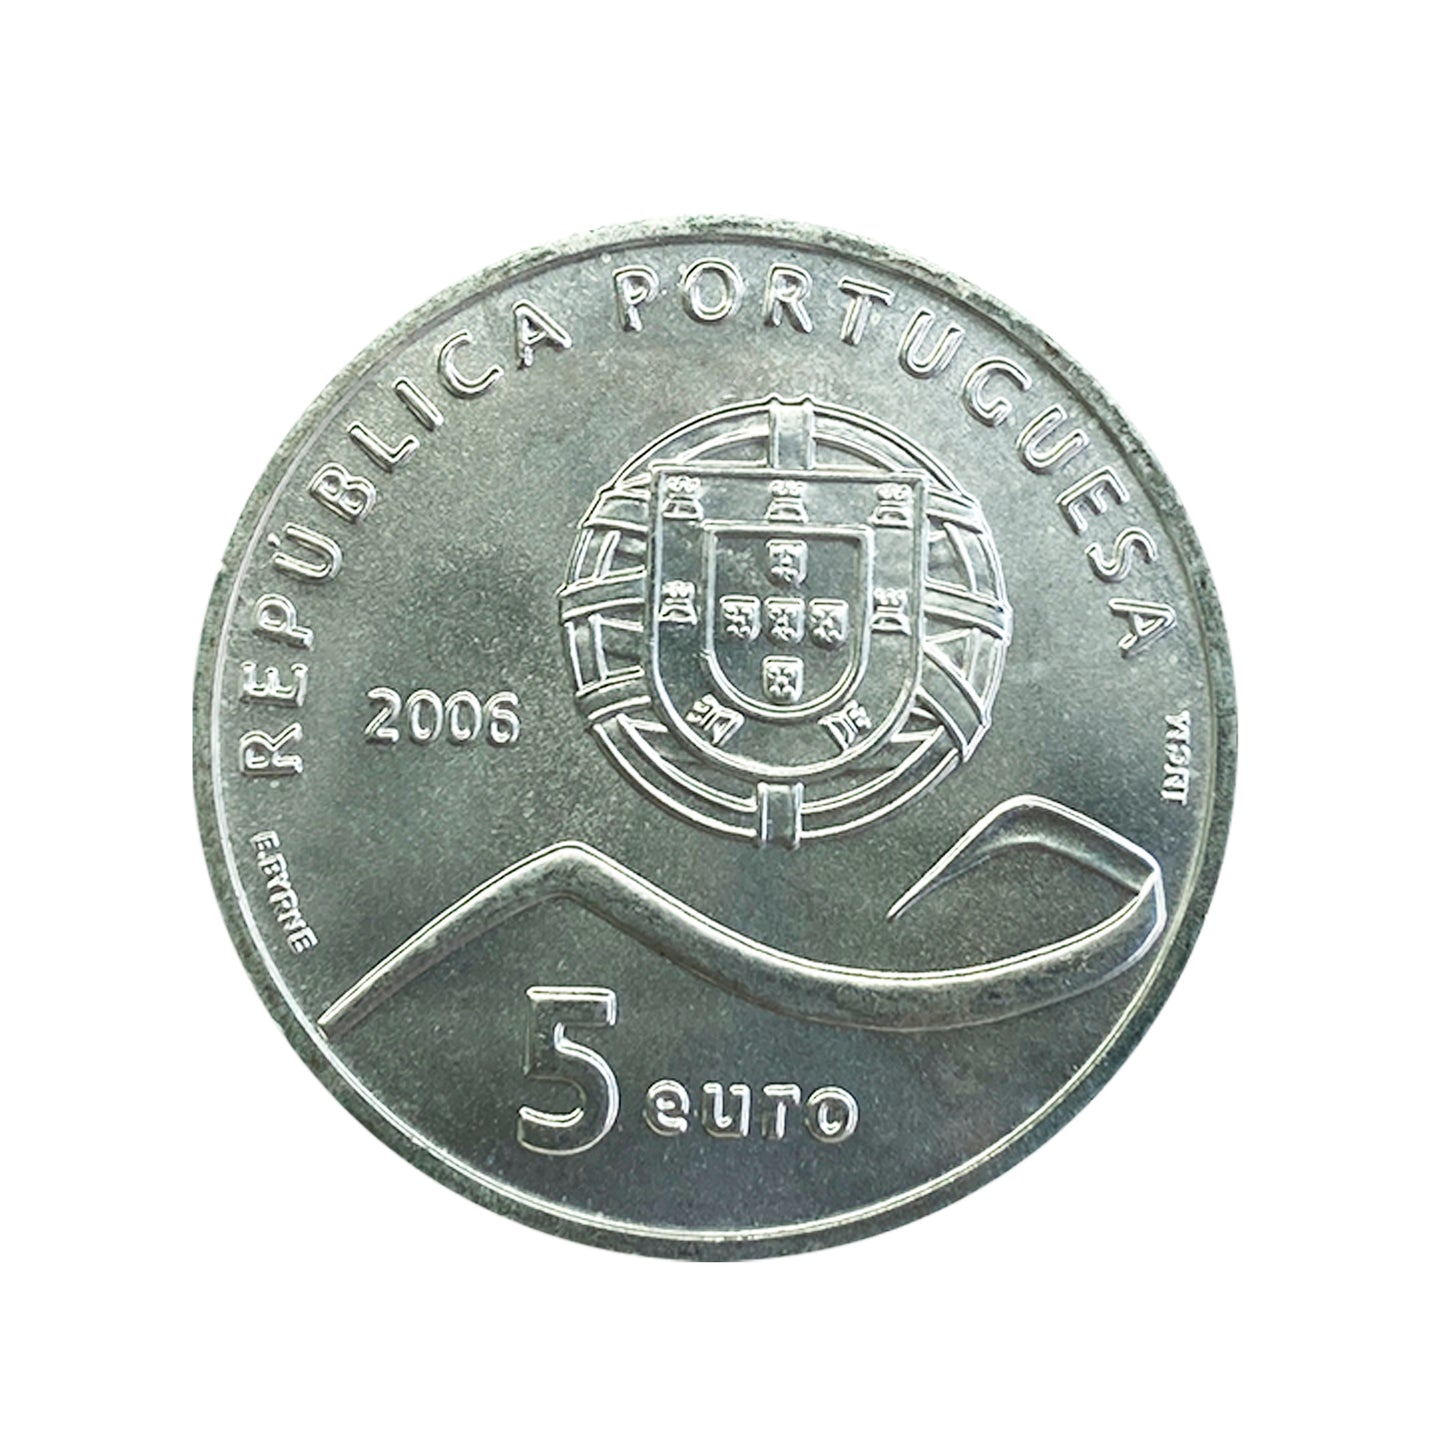 Portugal - Moneda 5 euros en plata 2006 - Monasterio Alcobaça